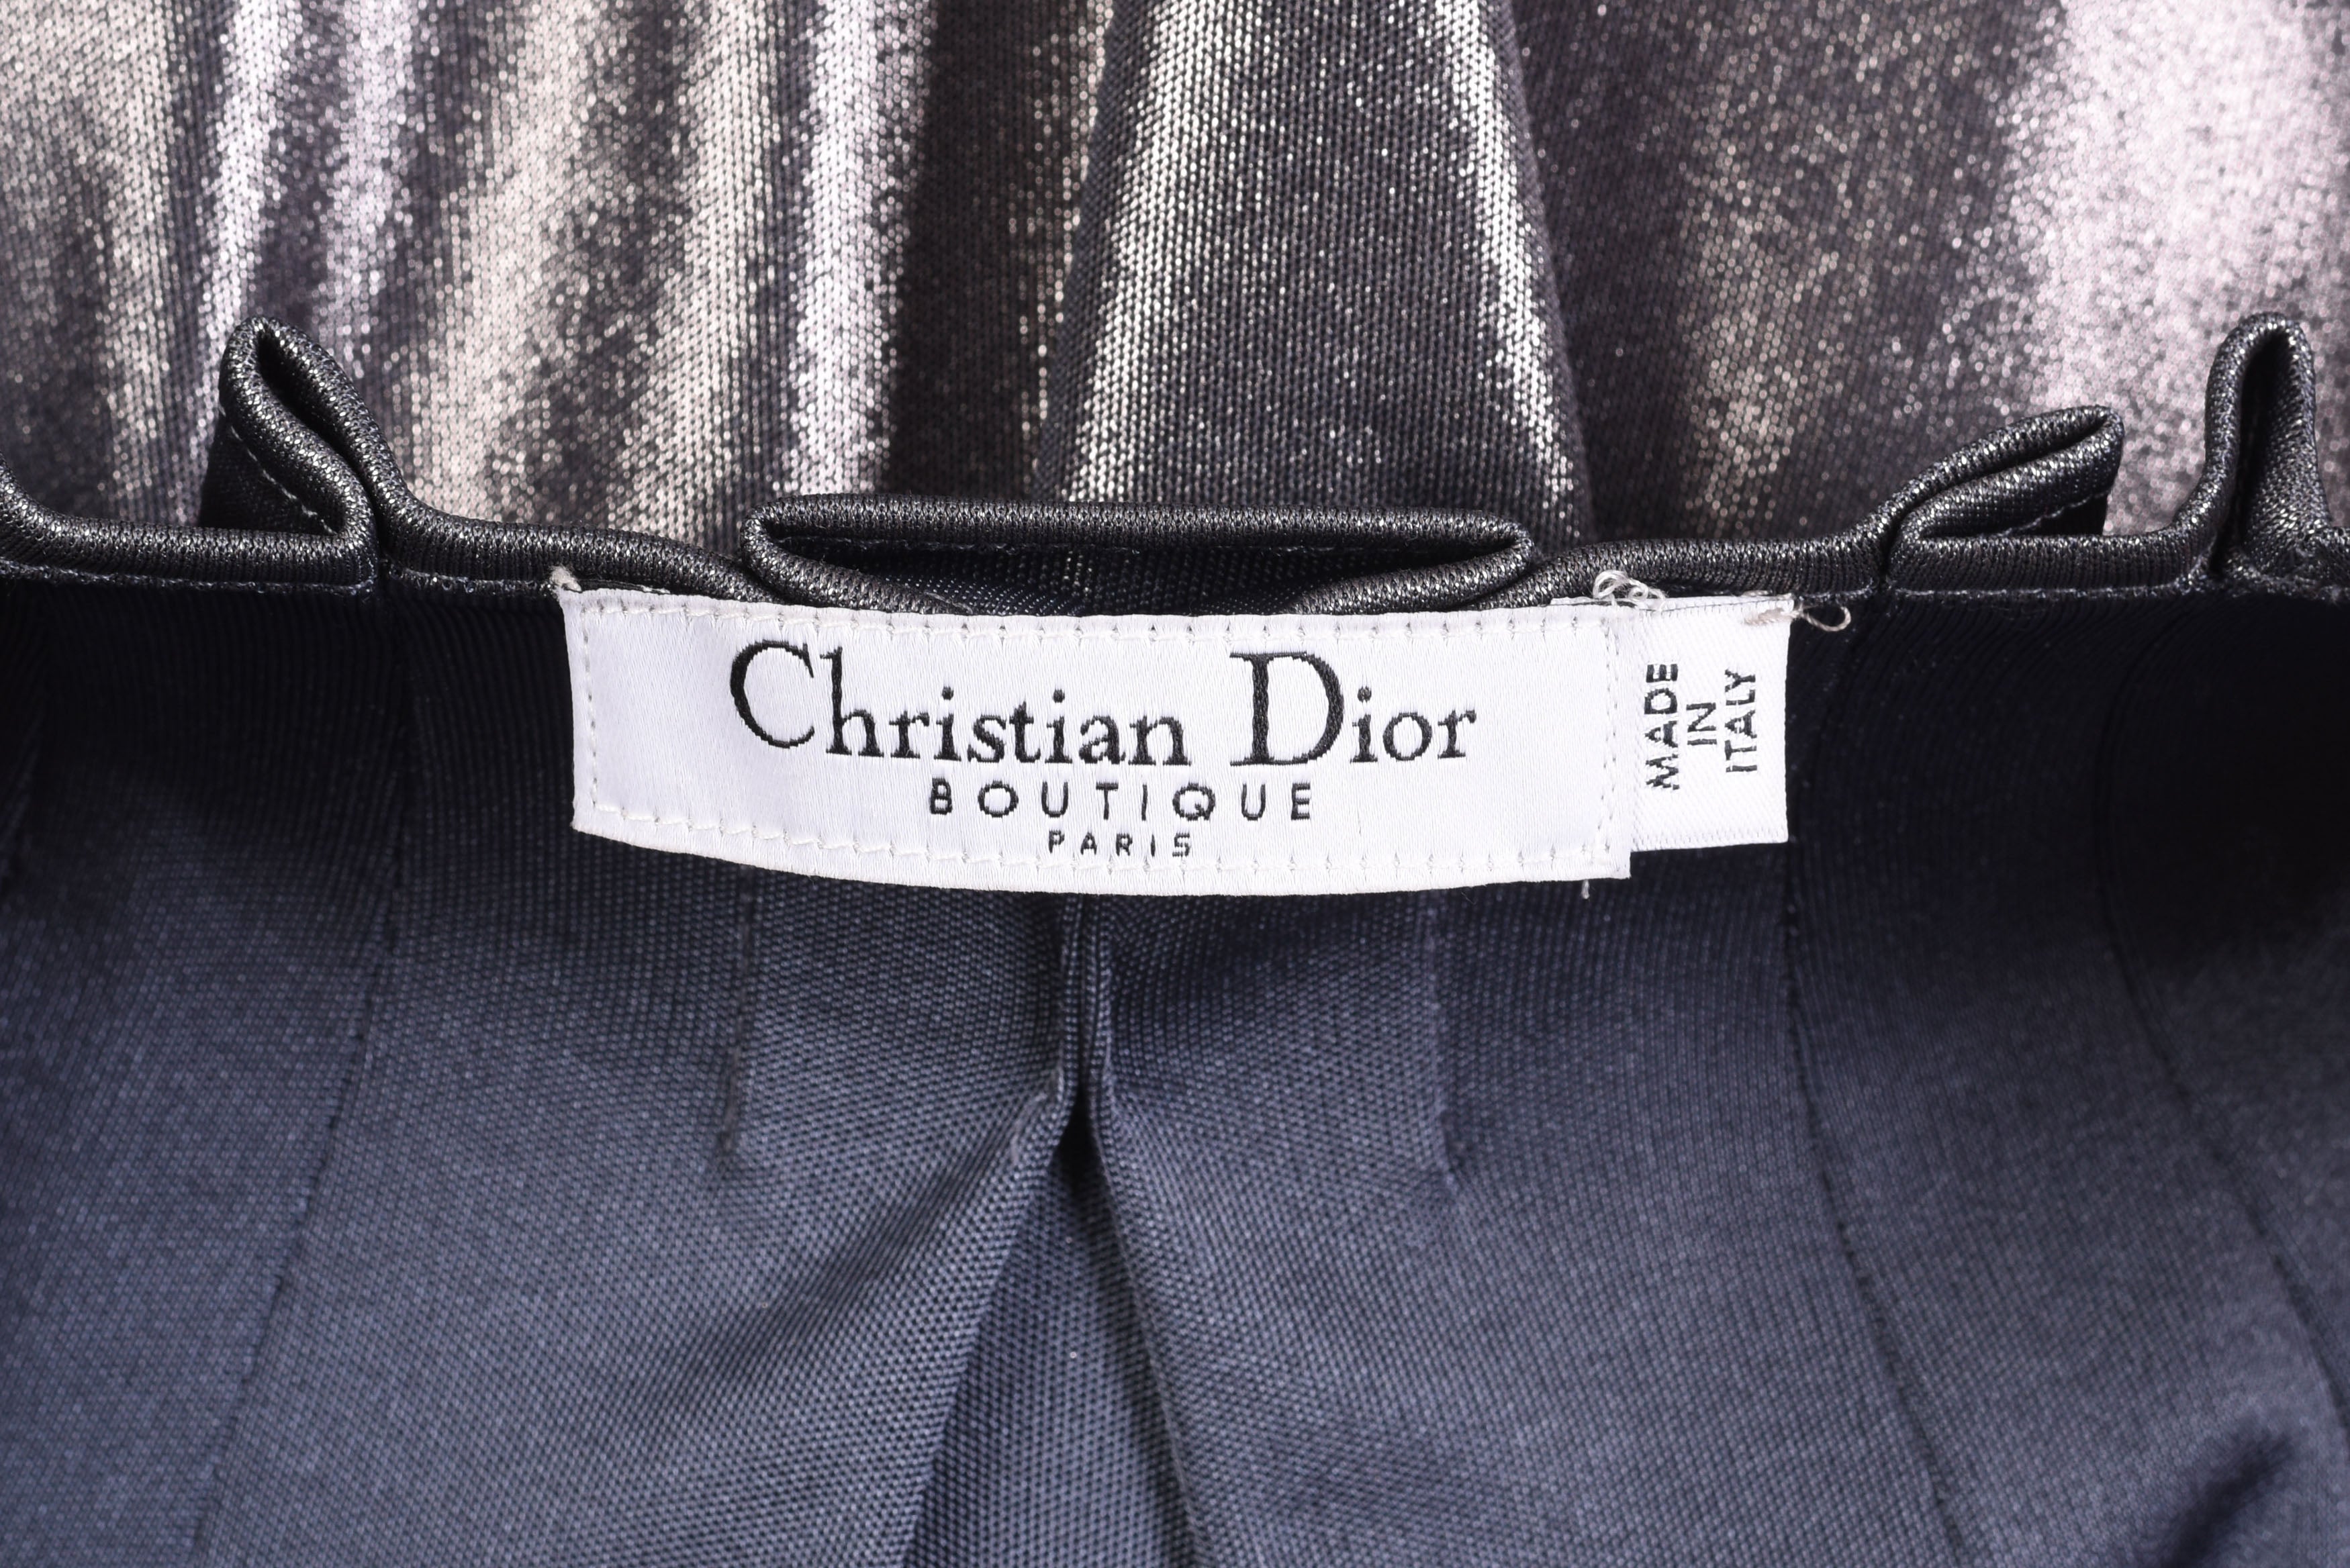 CHRISTIAN DIOR Boutique Paris Gray Metallic Top Size IT 42 US 6